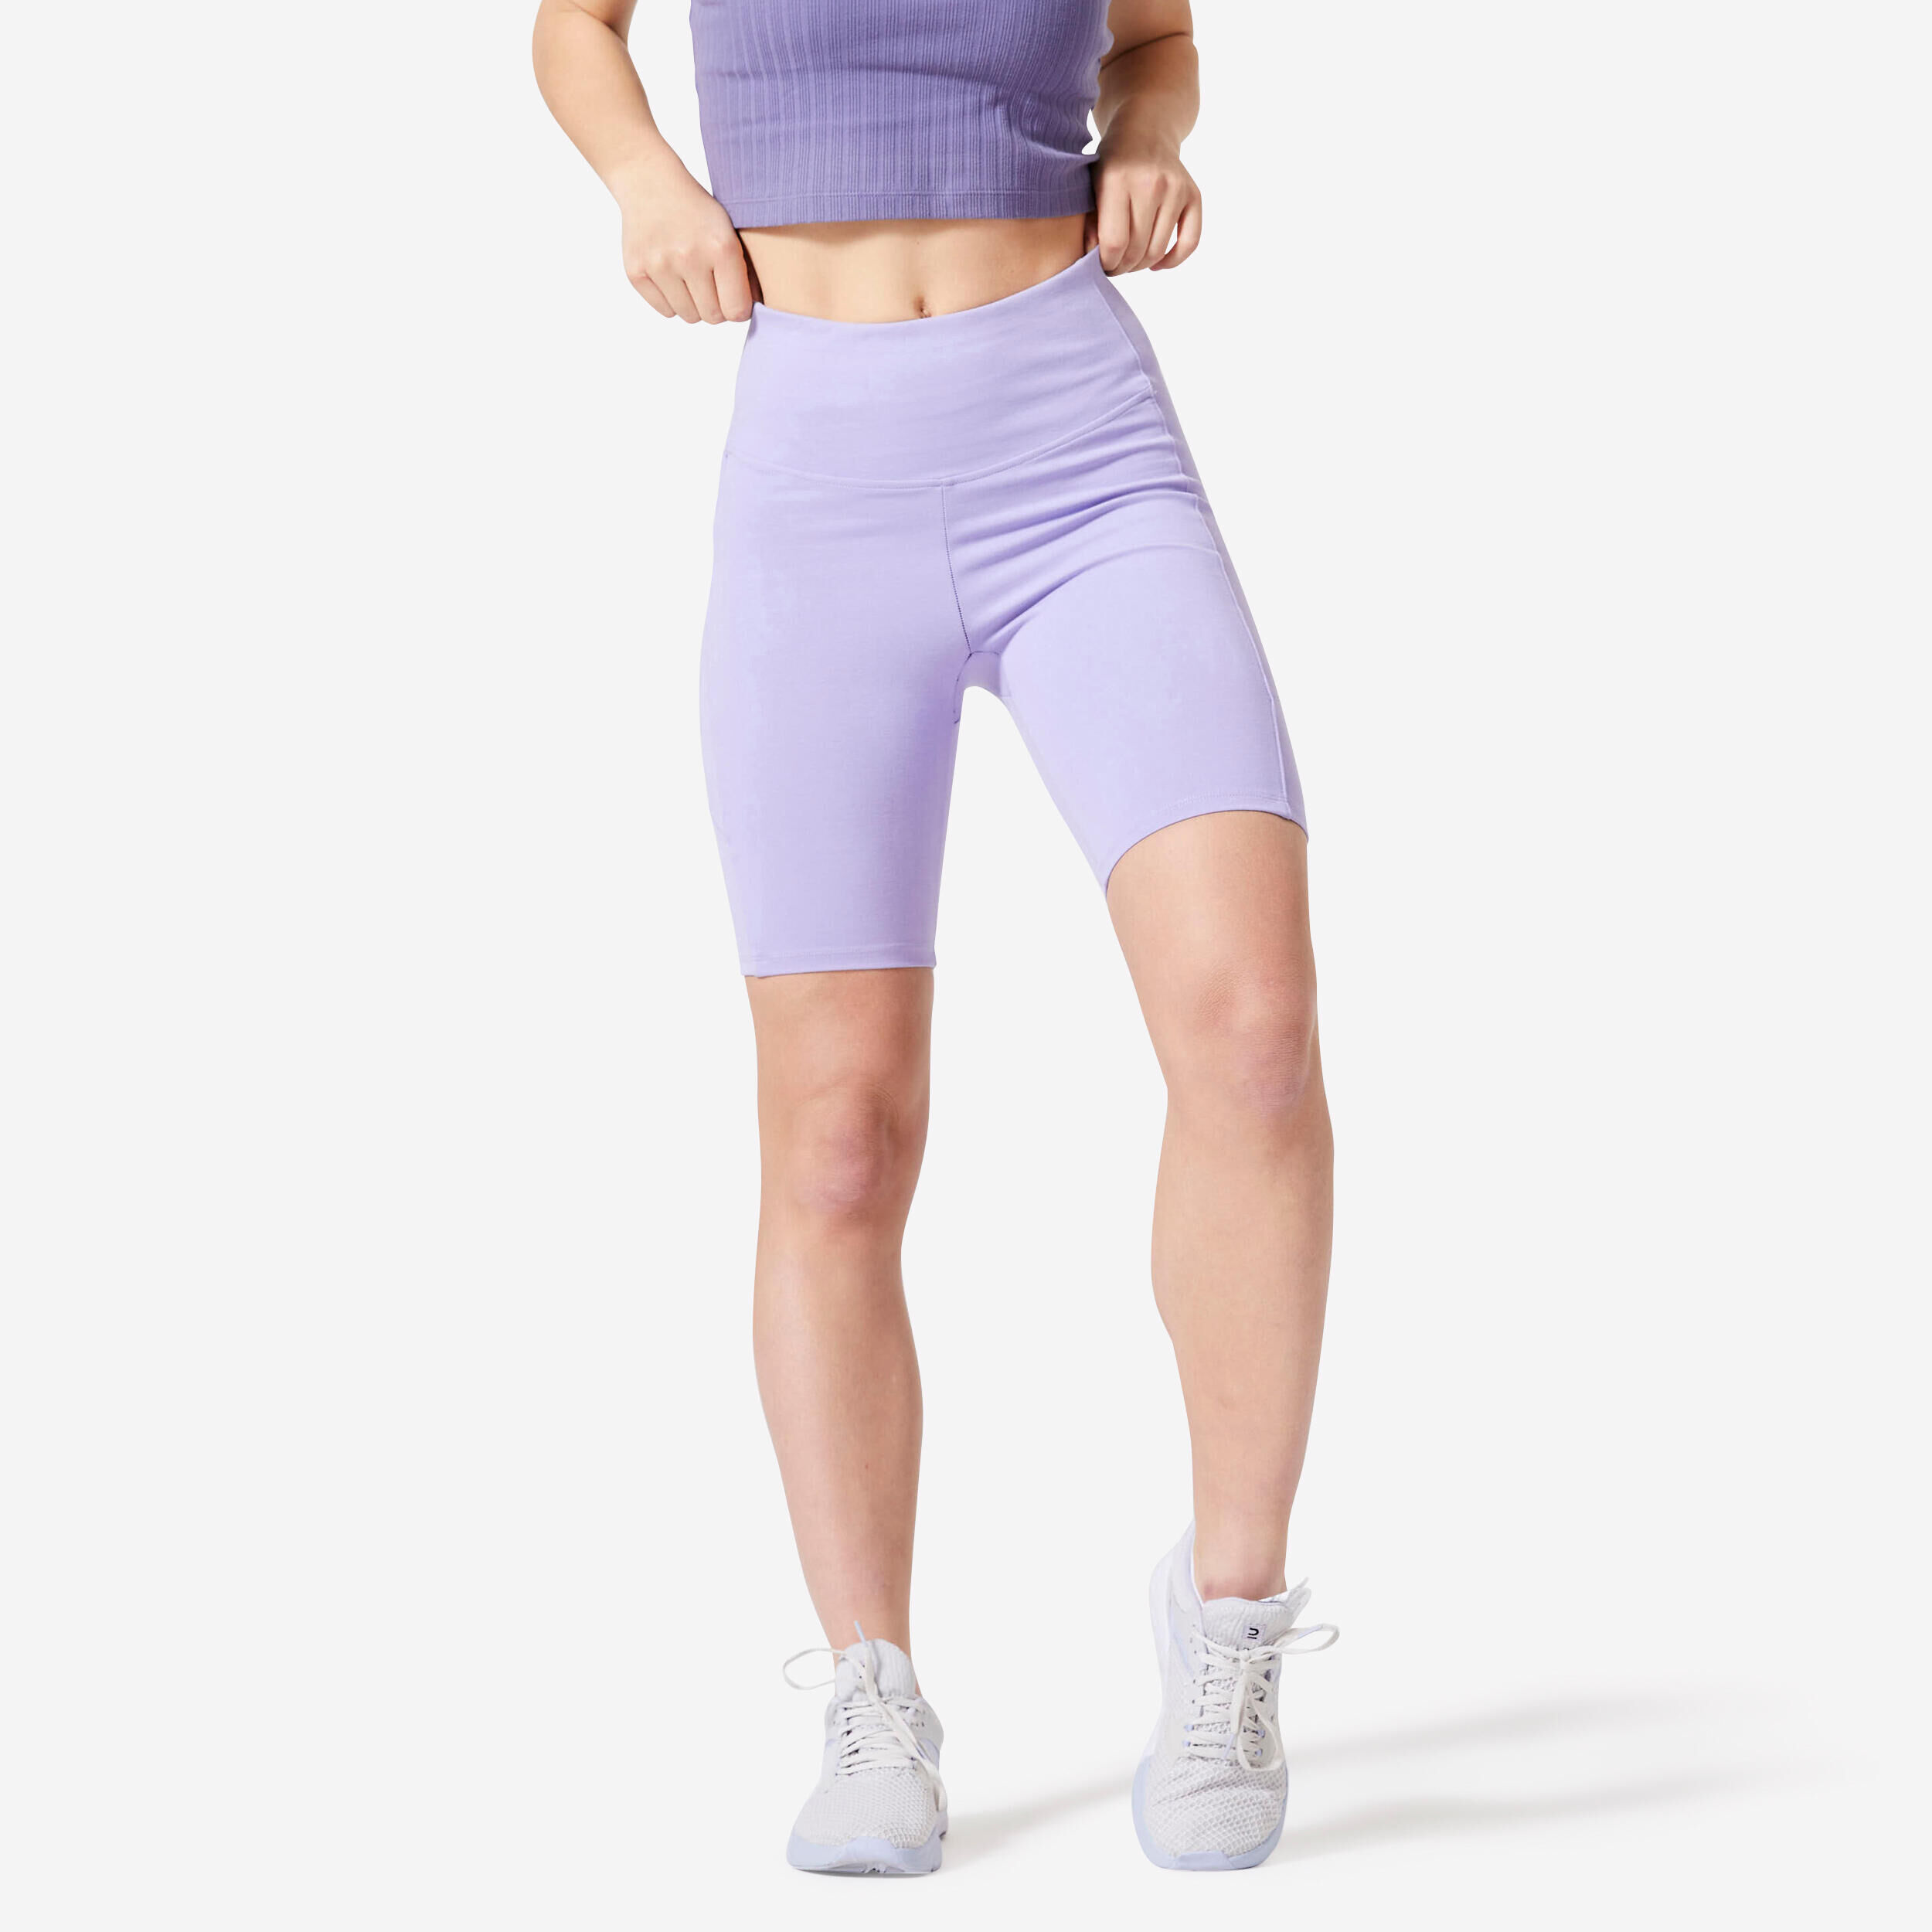 DOMYOS Women's Shaping Fitness Cycling Shorts 520 - Neon Purple